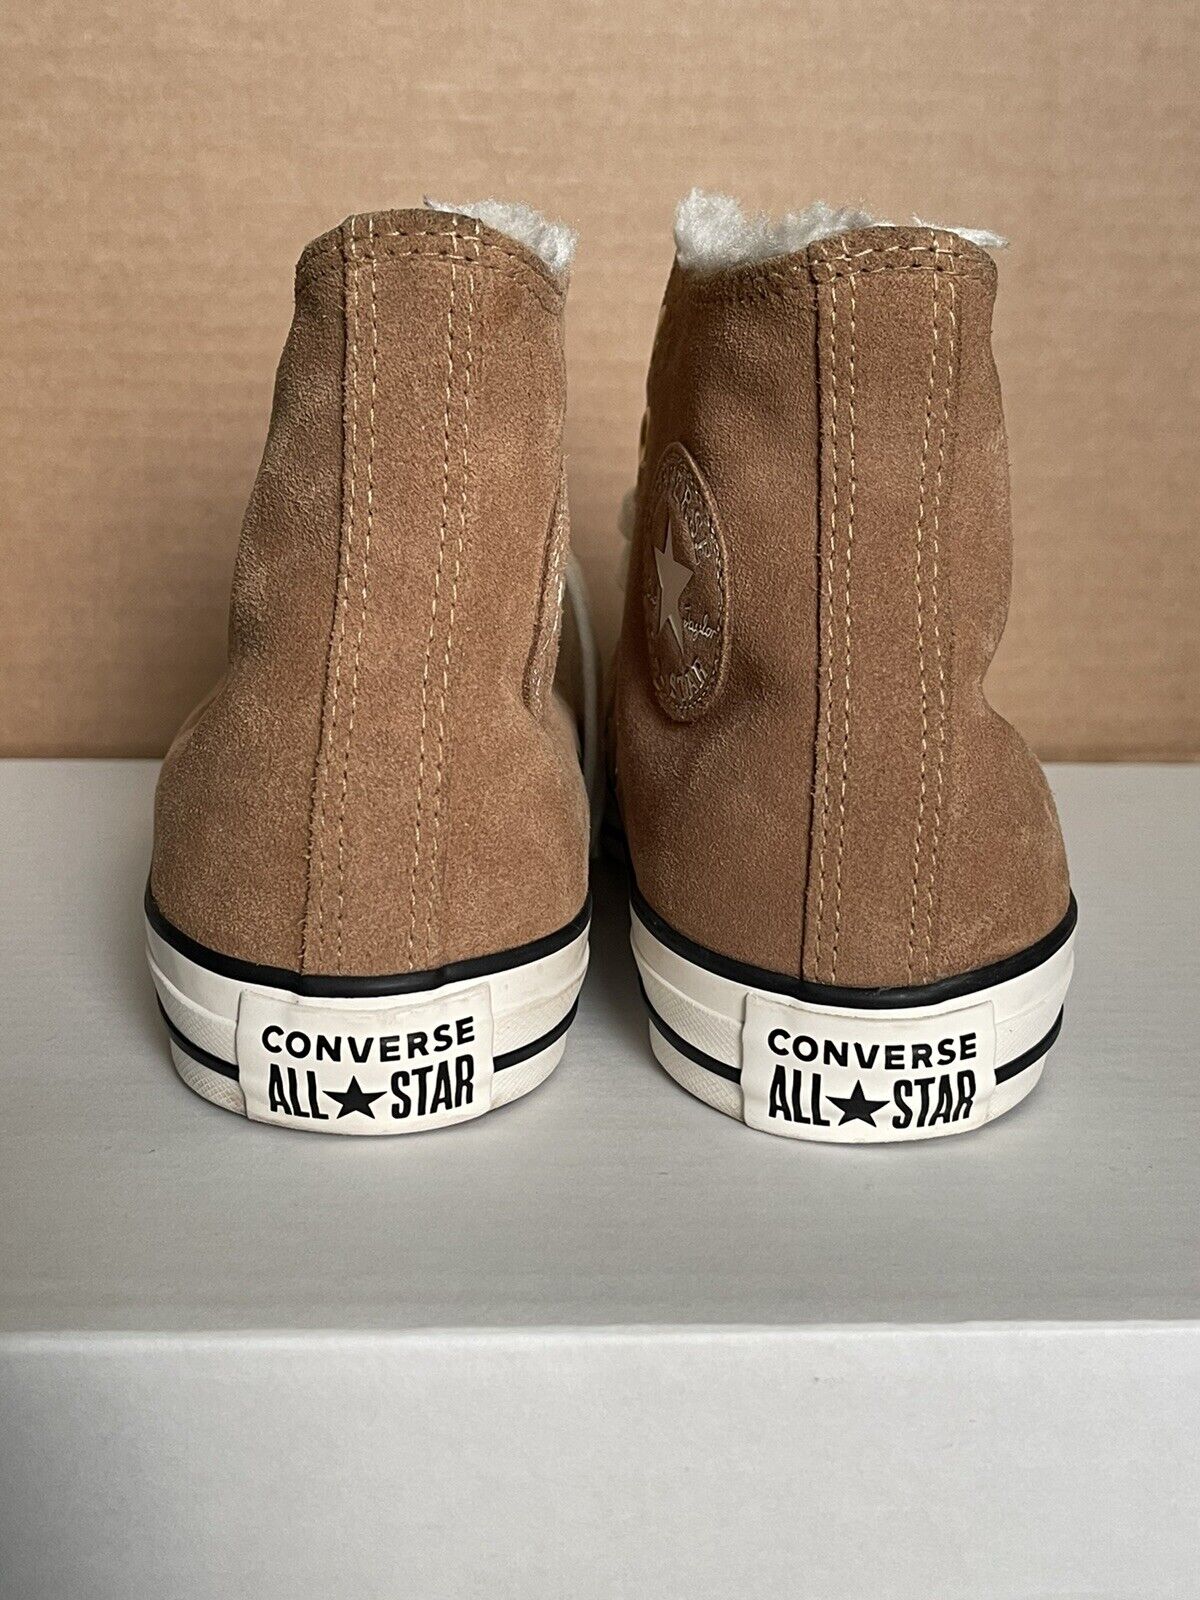 Converse All Star Chuck Taylor High Top Womens Boots Camel Suede Sz 7 # 078  | eBay